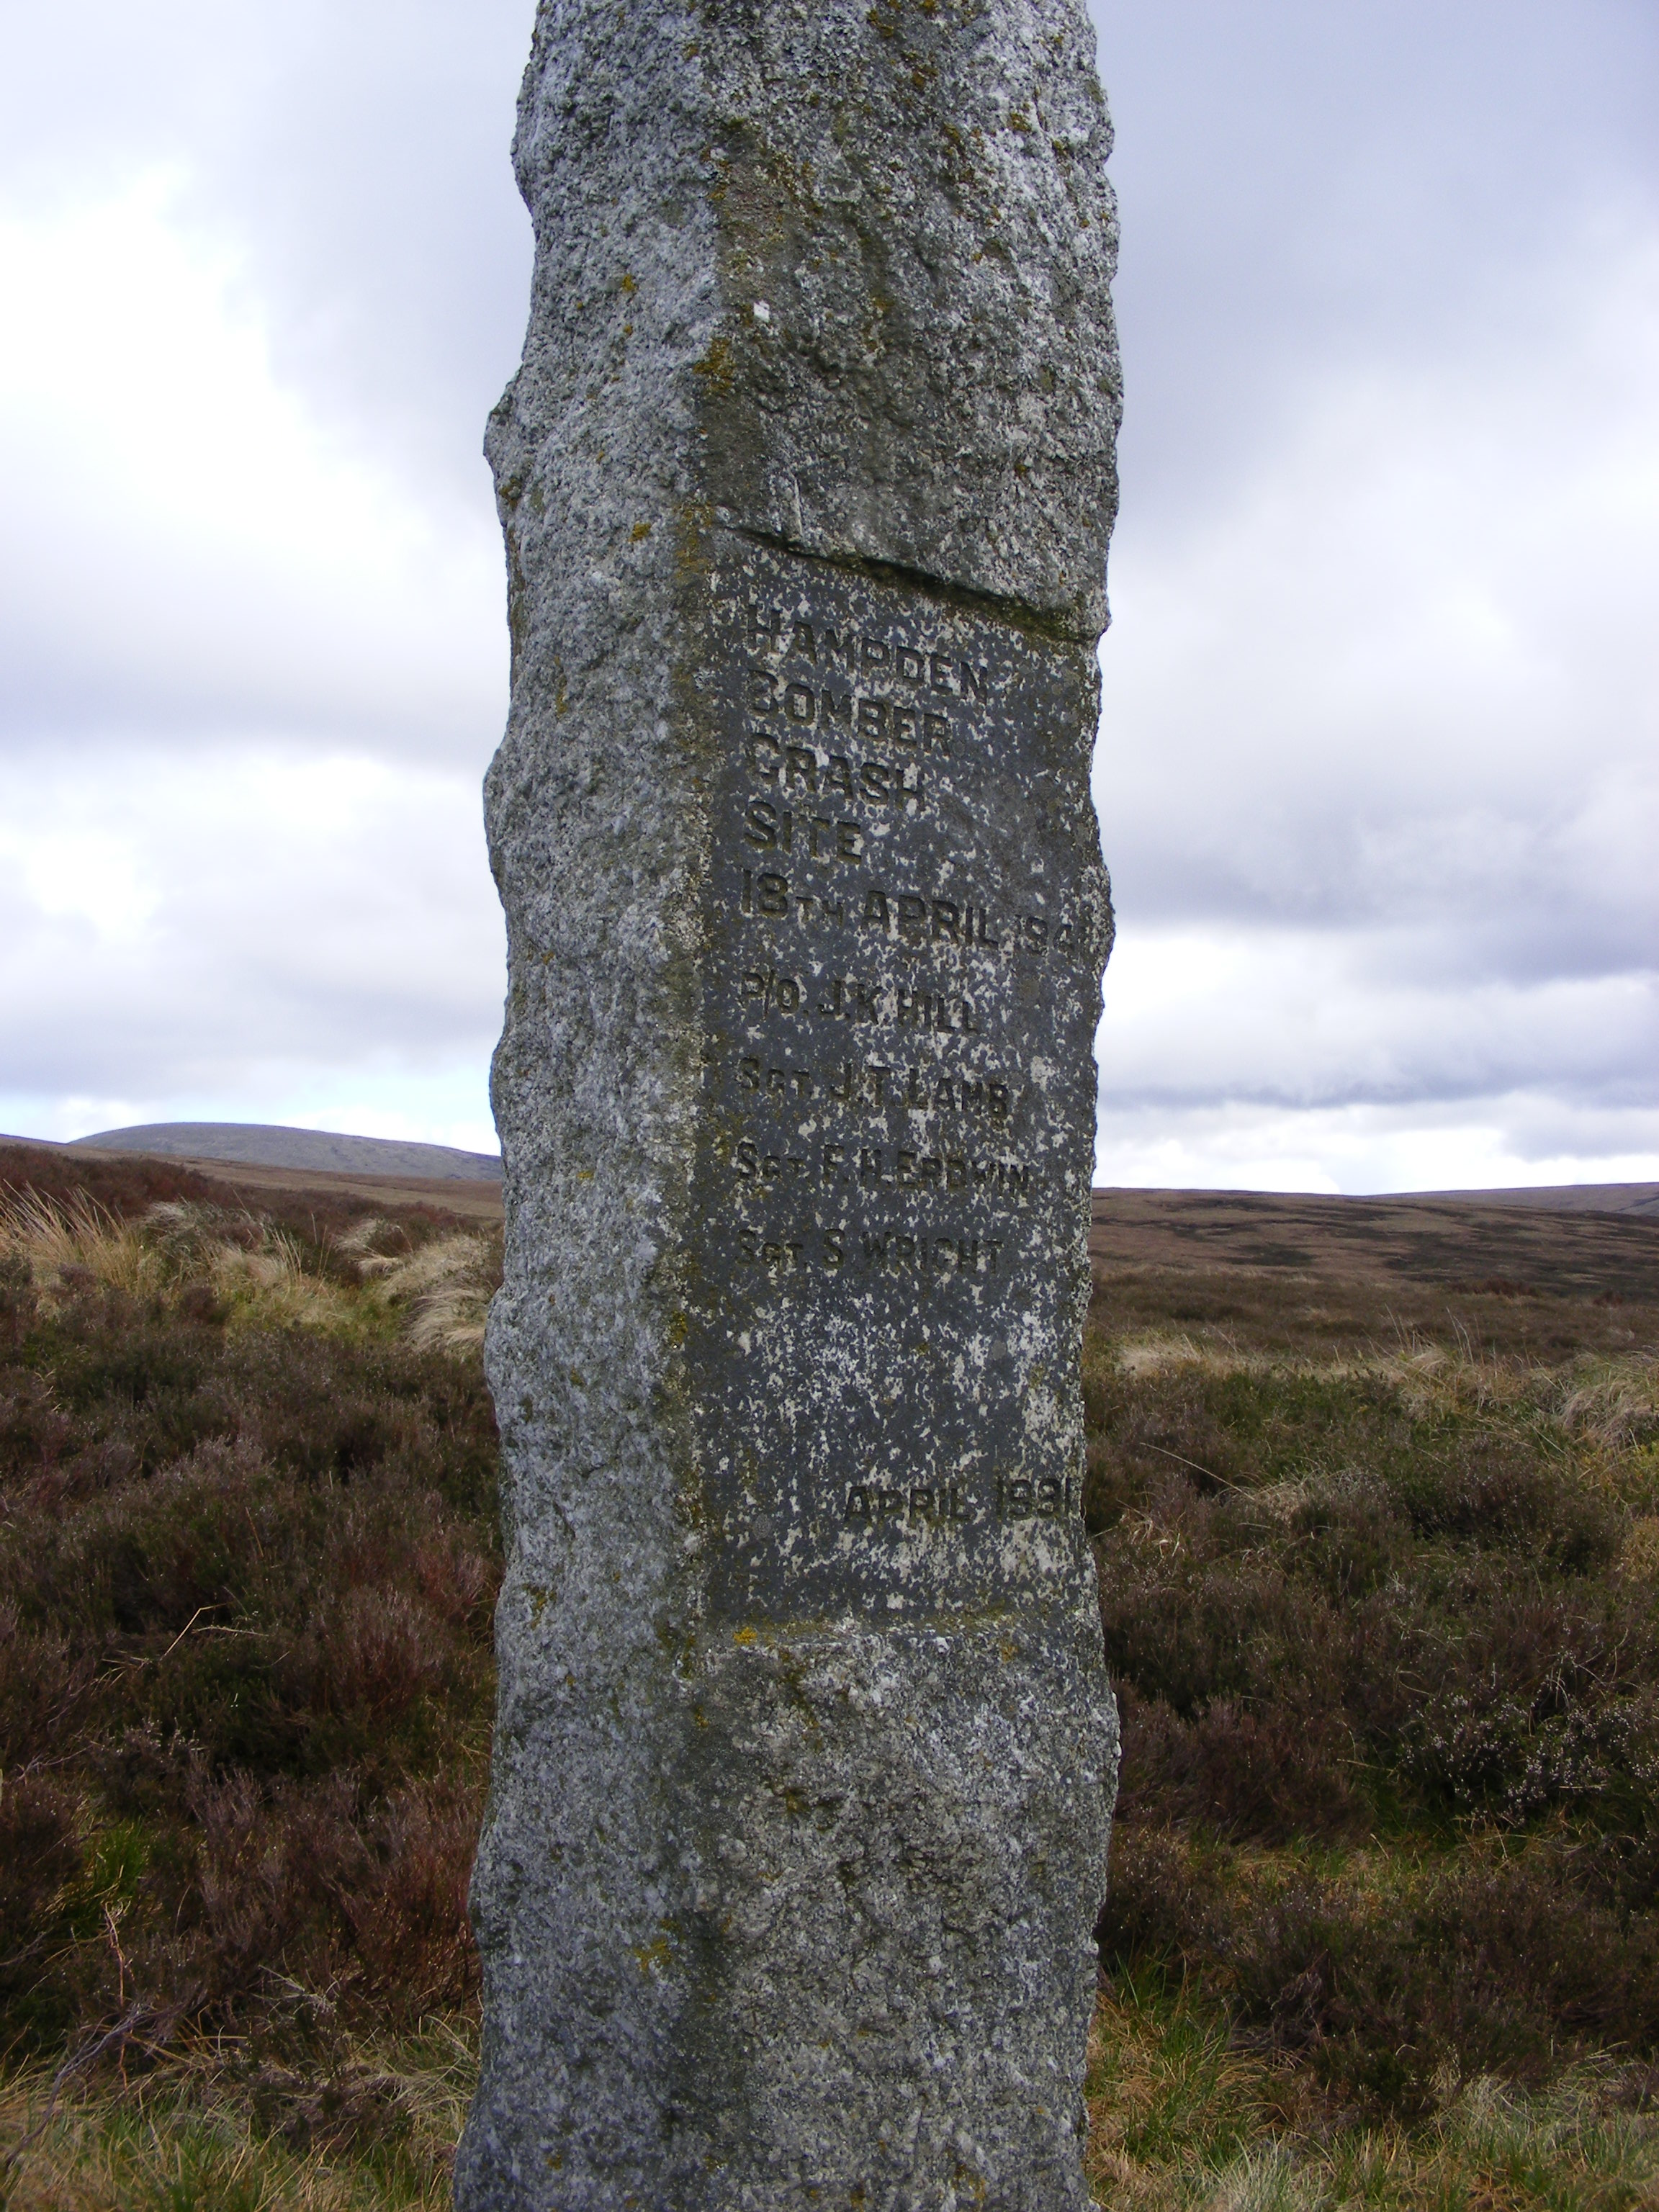 The stone inscription